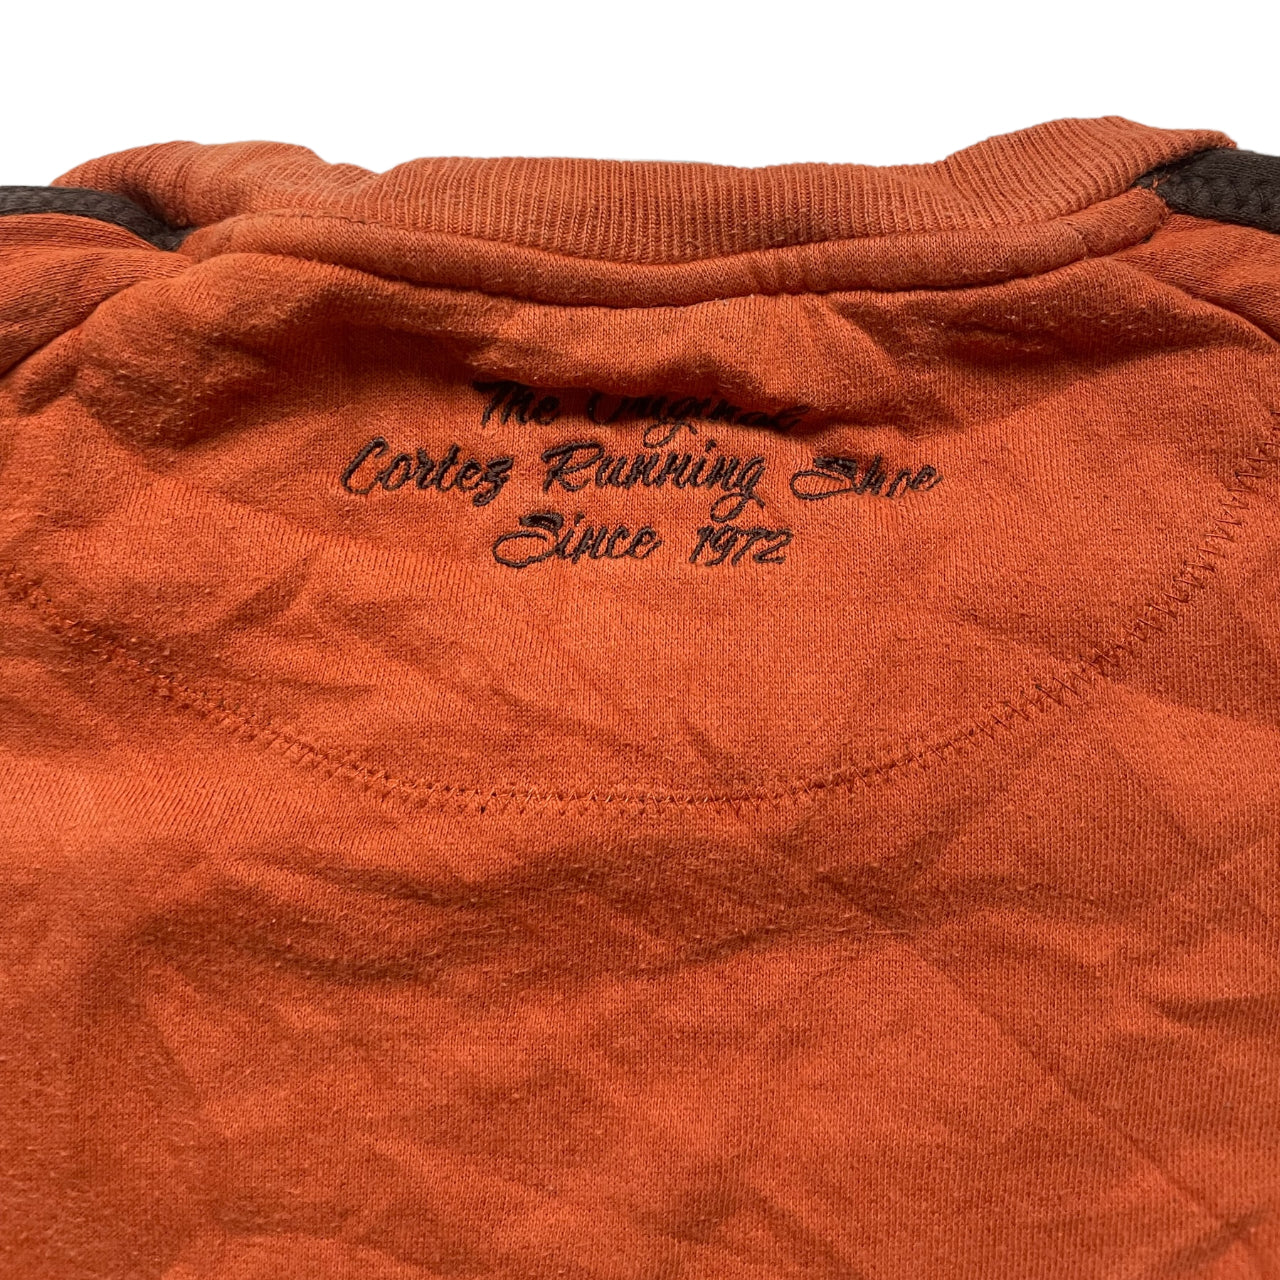 Vintage Nike Sweatshirt Retro 90s M Size Orange A_33